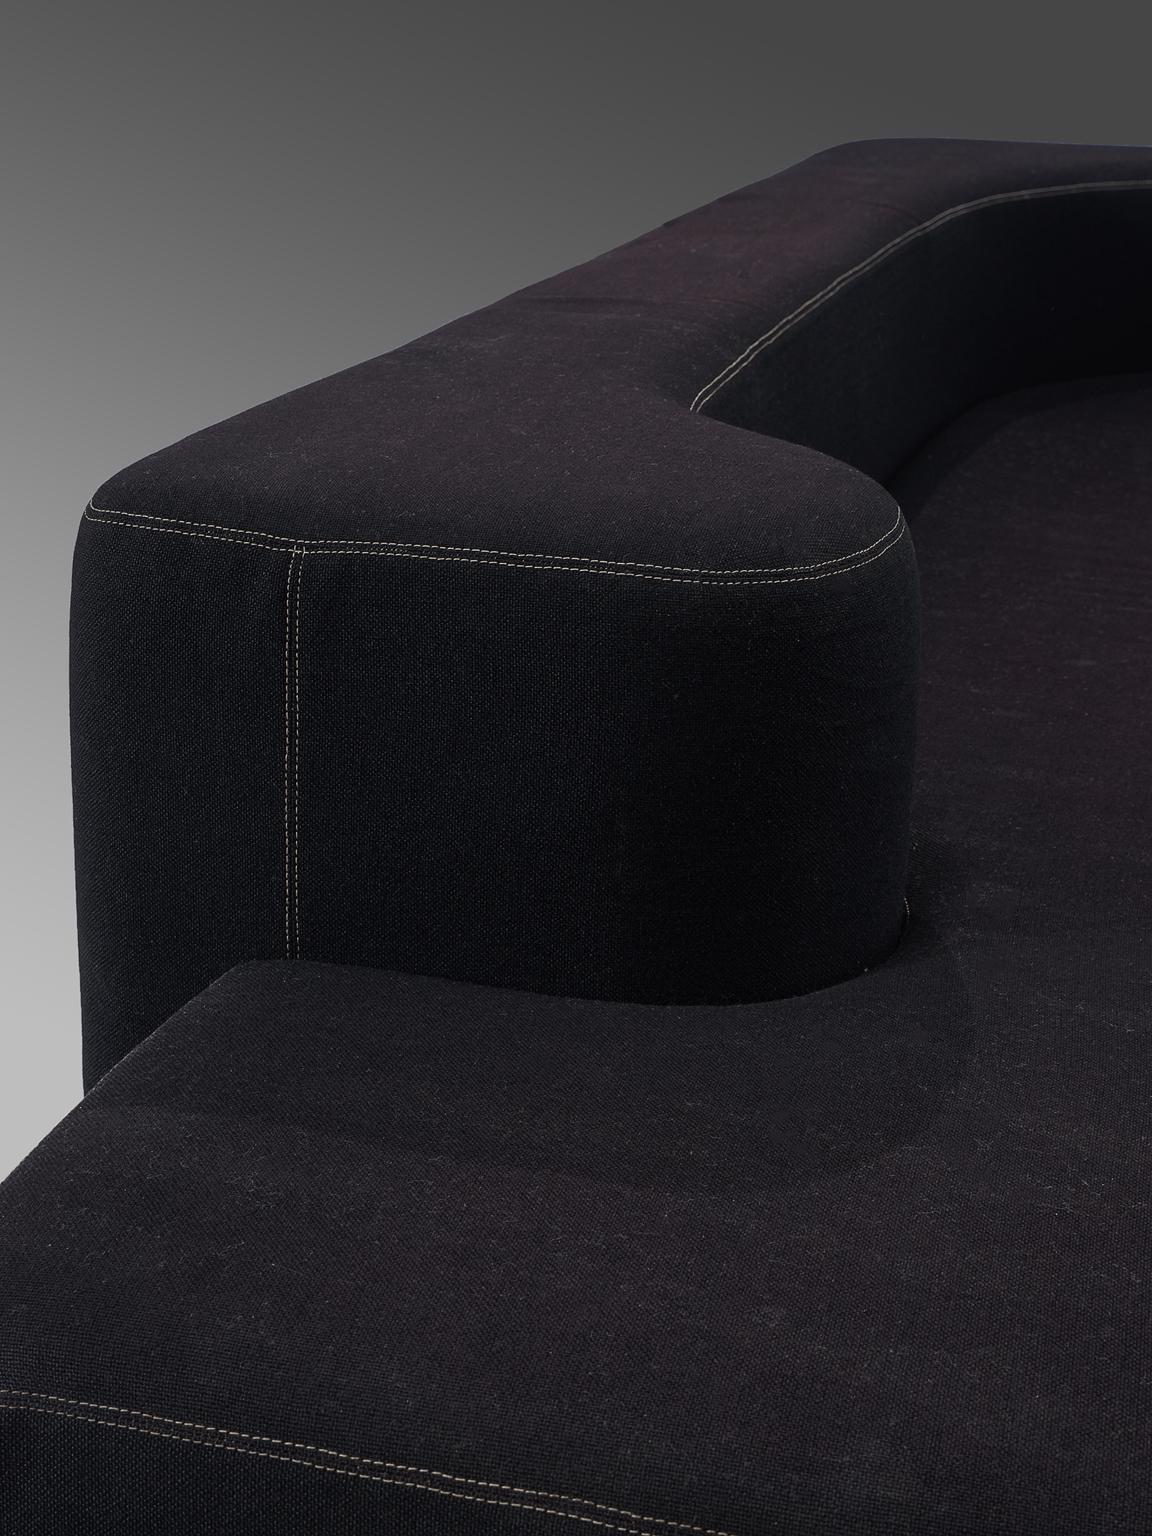 Fabric Pamio, Massari and Toso Black Modular 'Lara' Sofa